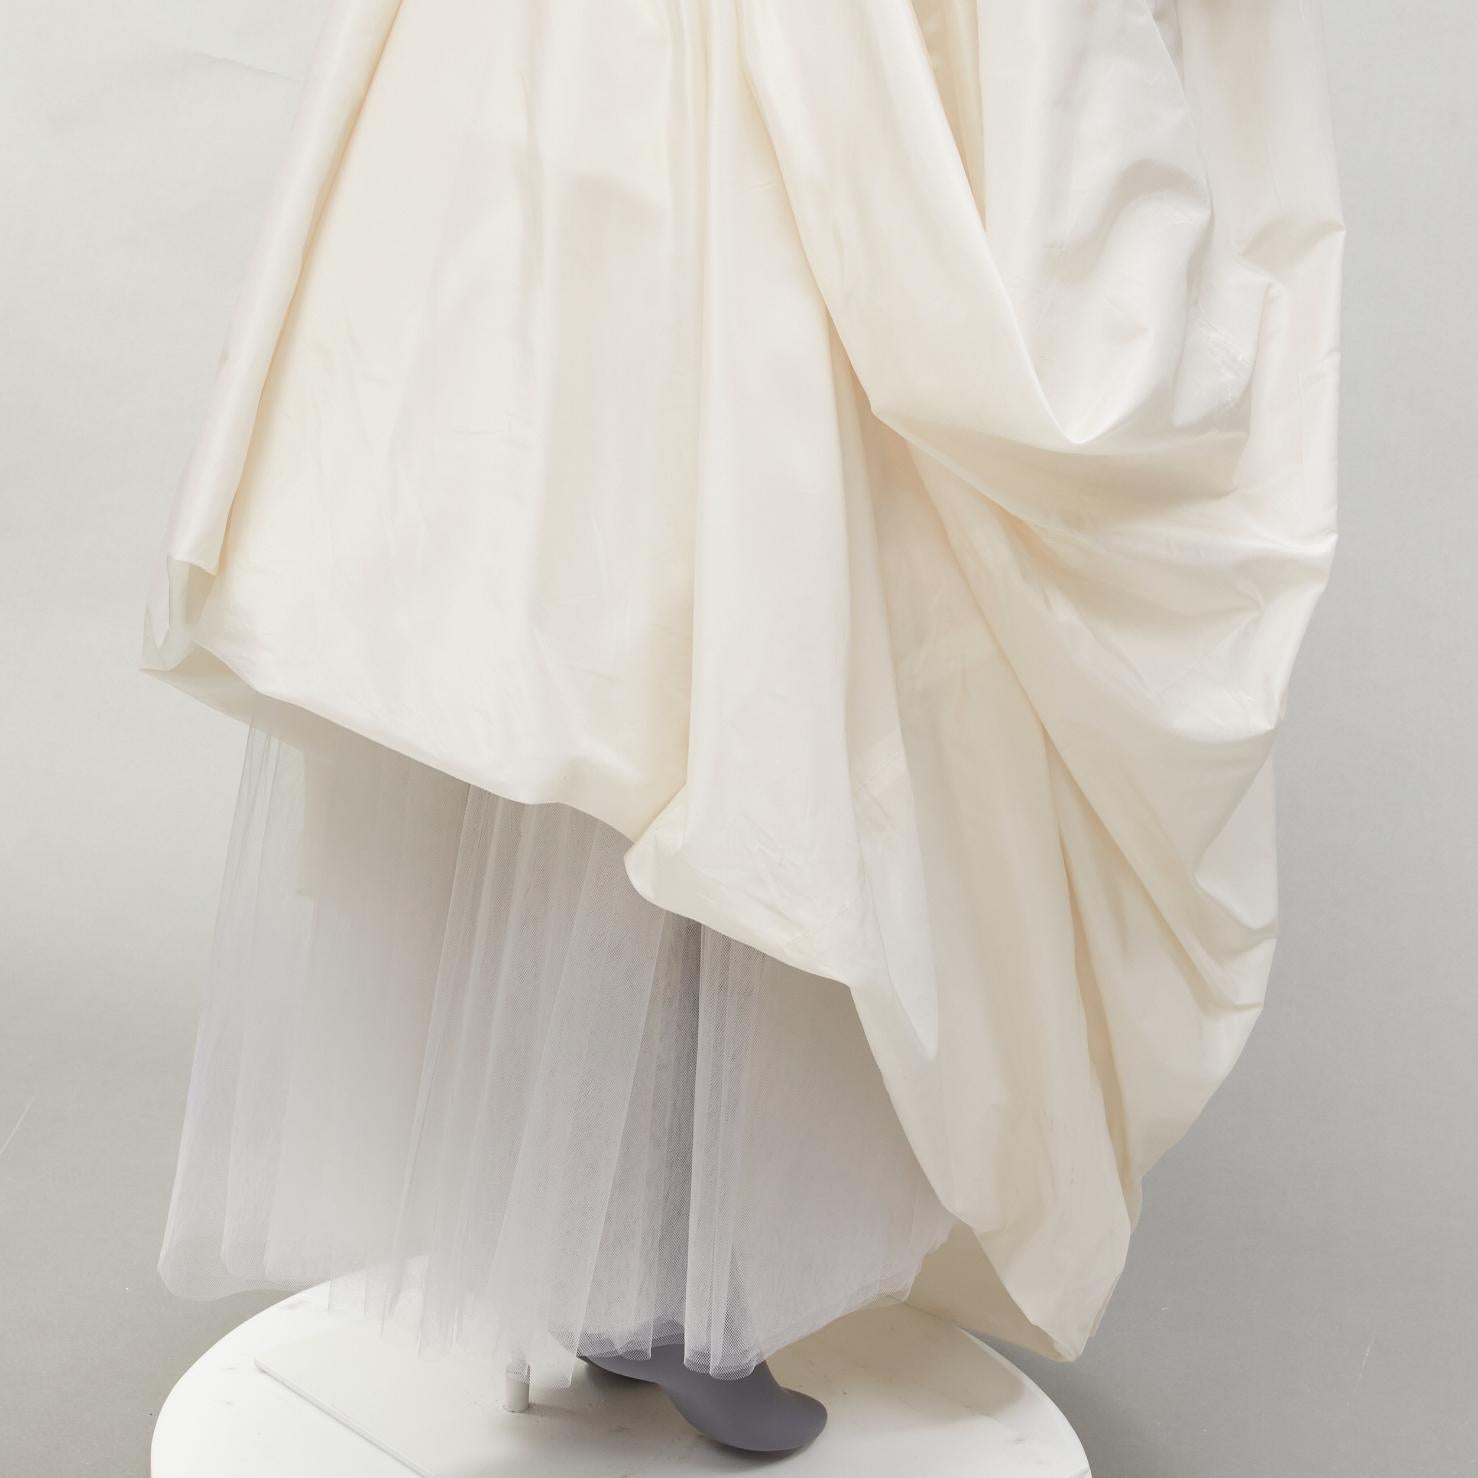 DOLCE GABBANA 1990s Vintage corset bustier tulle skirt 2 piece bridal dress IT38 For Sale 6